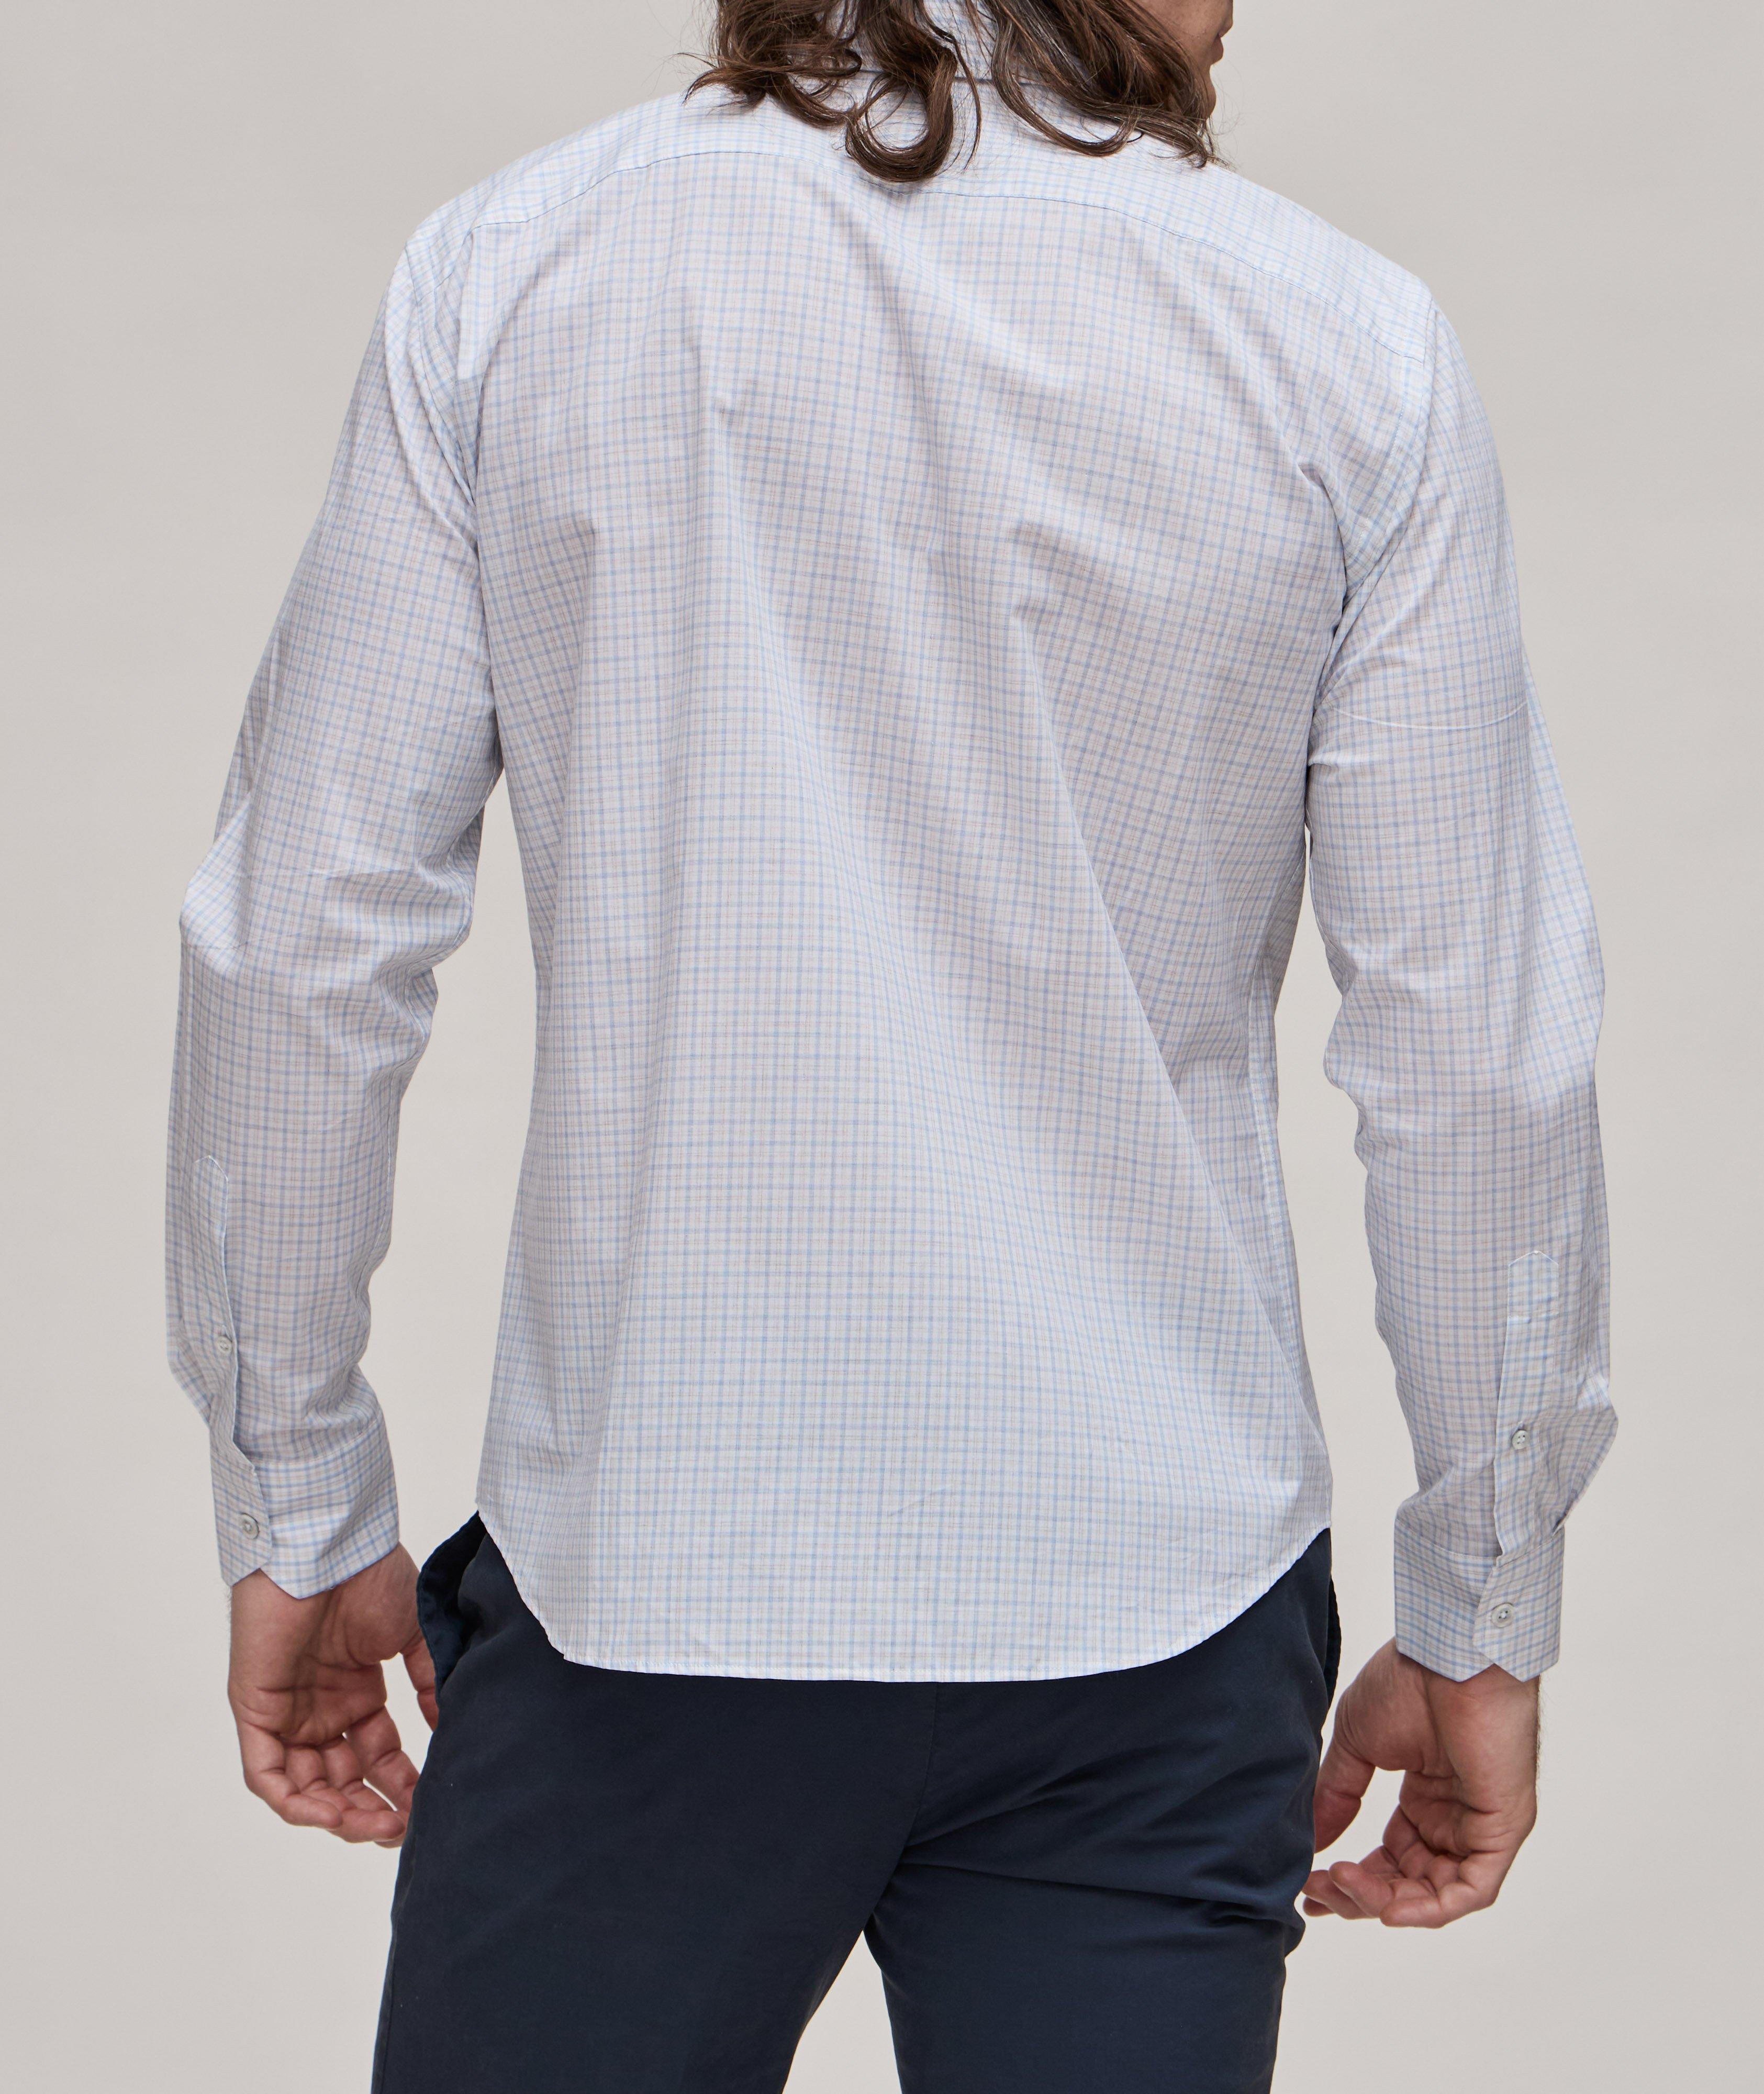 Brera Checkered Cotton Sport Shirt image 2